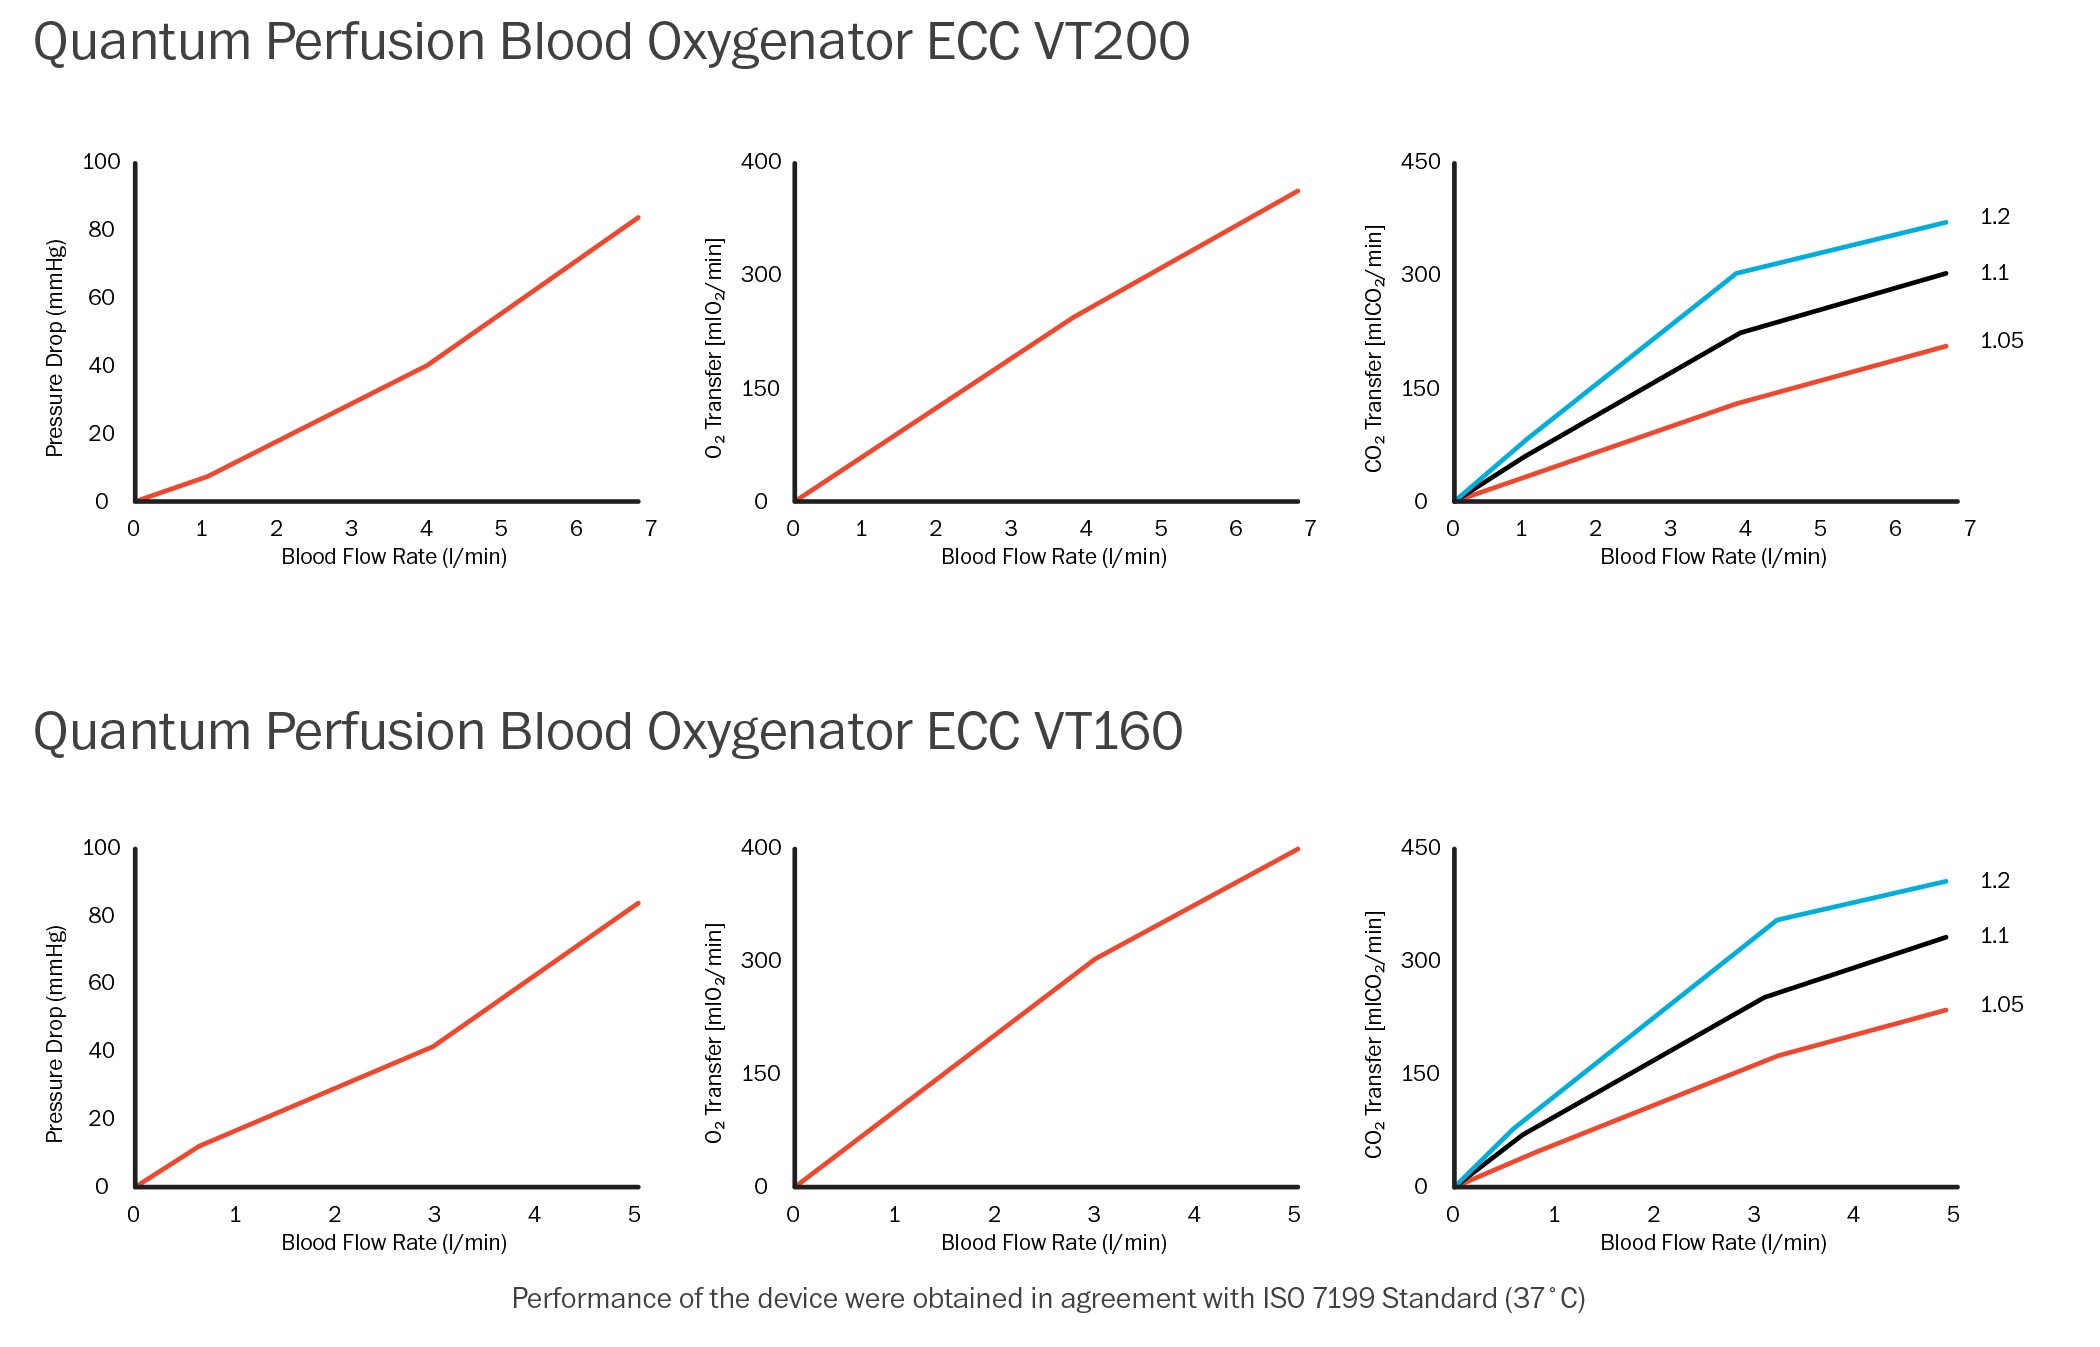 Quantum Perfusion Blood Oxygenator ECC VT200 and VT160